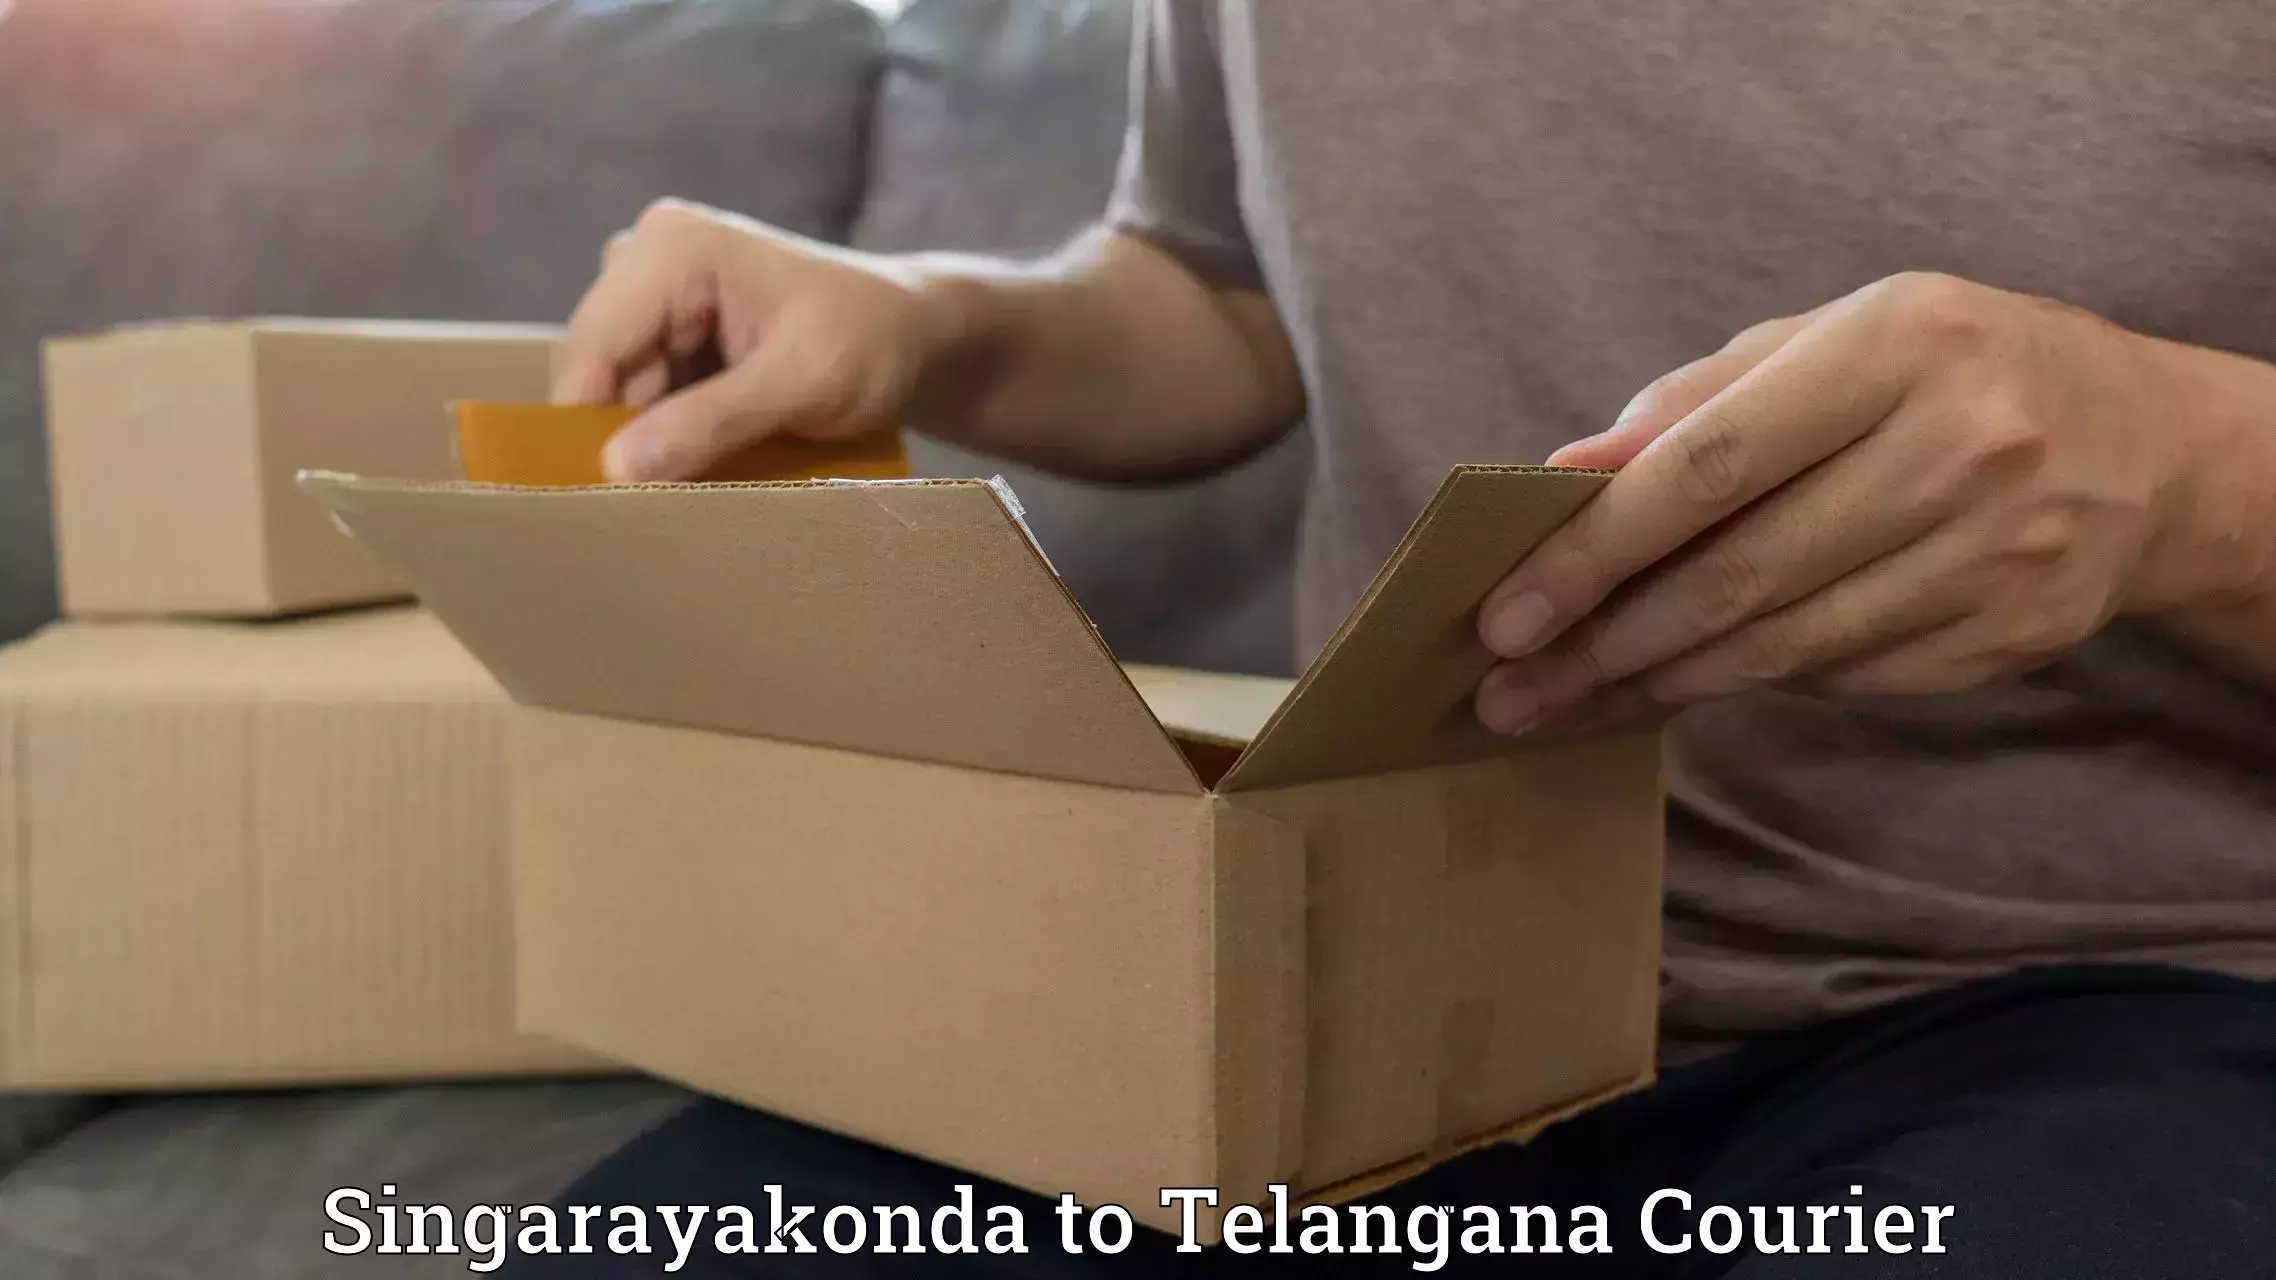 Reliable delivery network Singarayakonda to Kaghaznagar